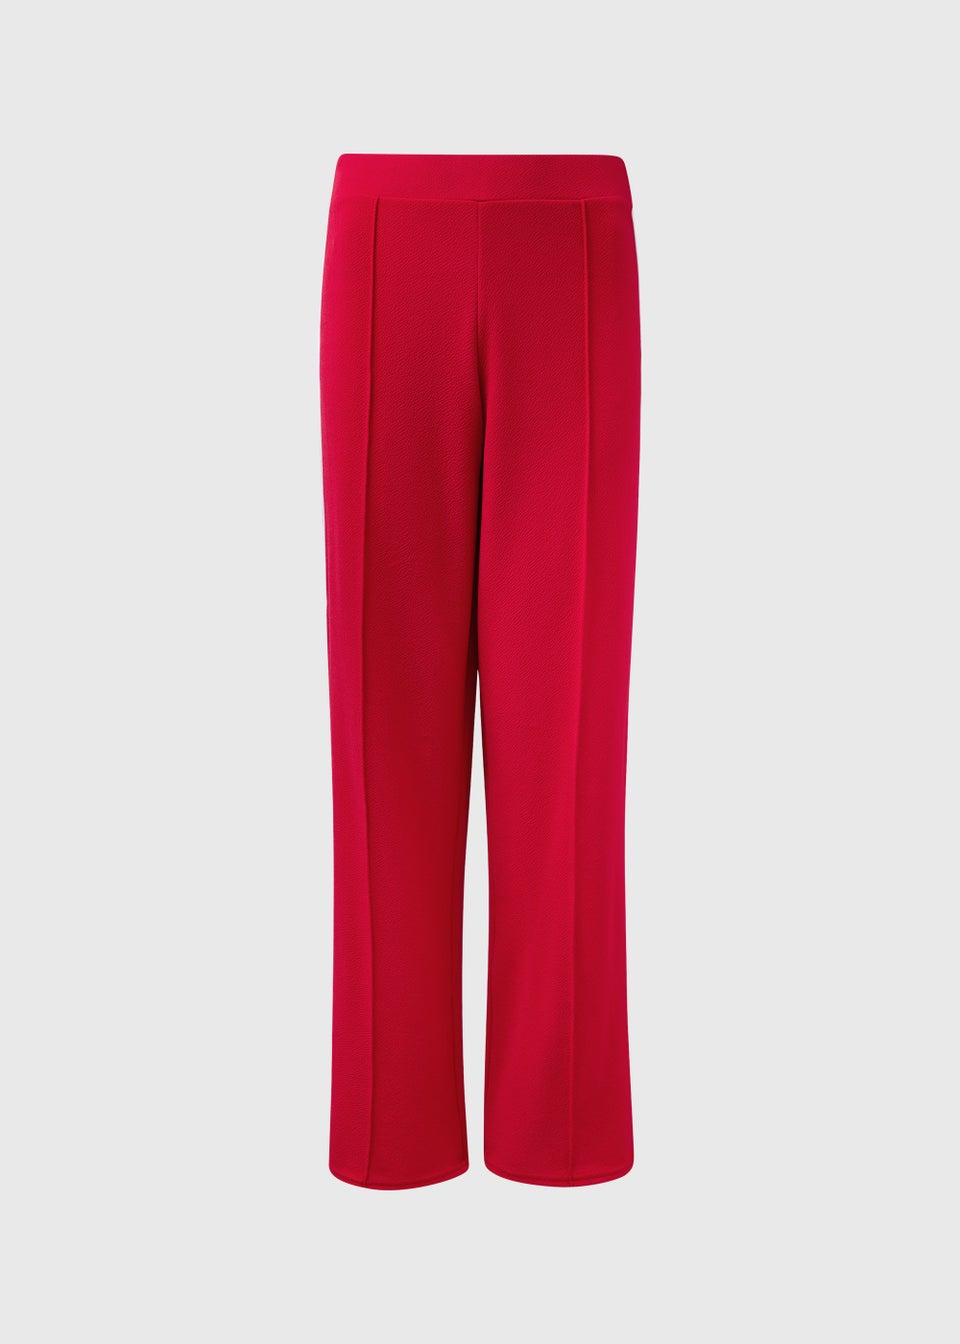 Buy Women's Red Trousers Online | Next UK-as247.edu.vn